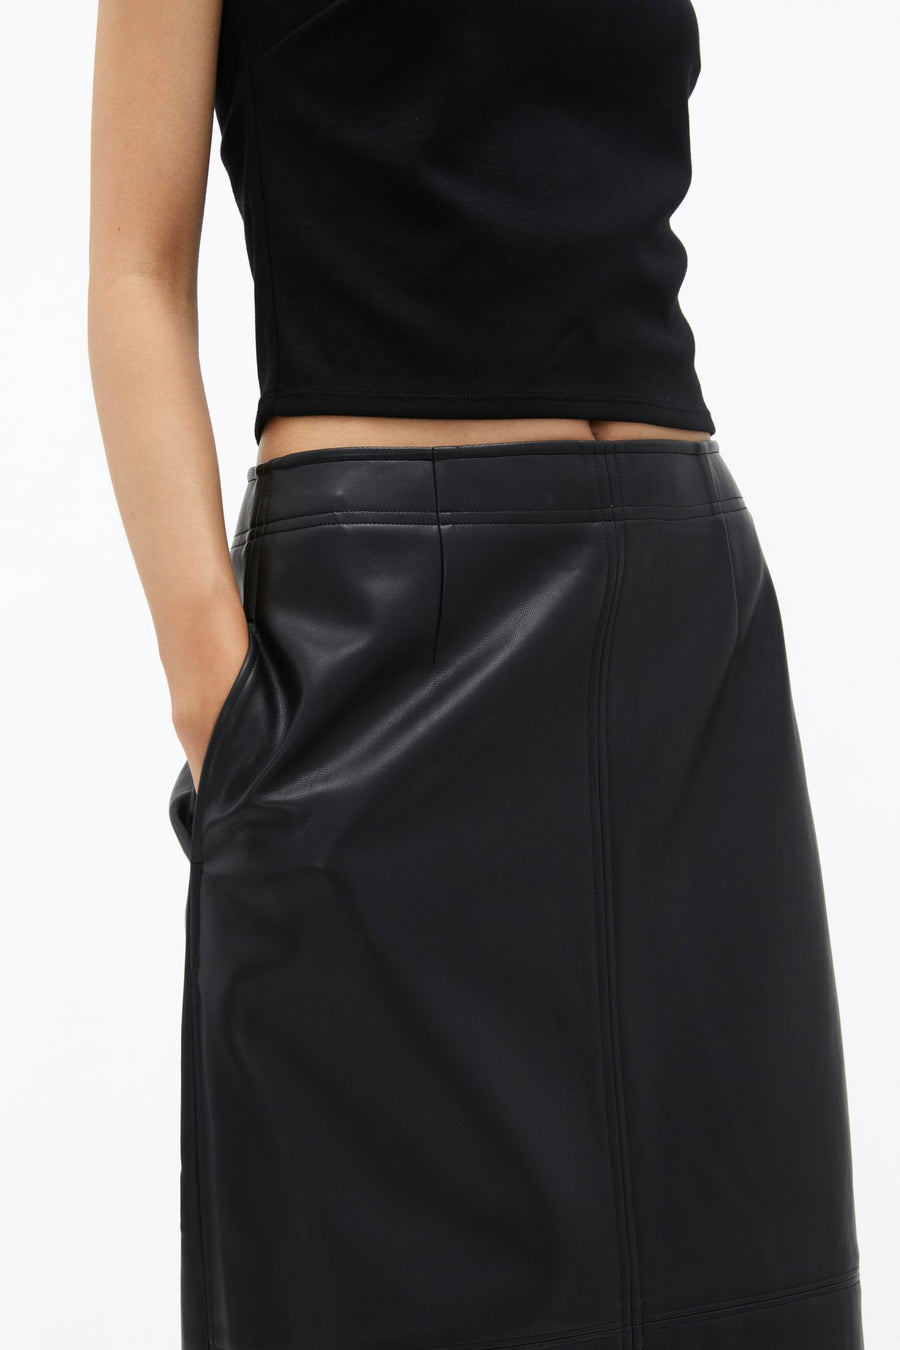 by DOE - Slit Leather Skirt